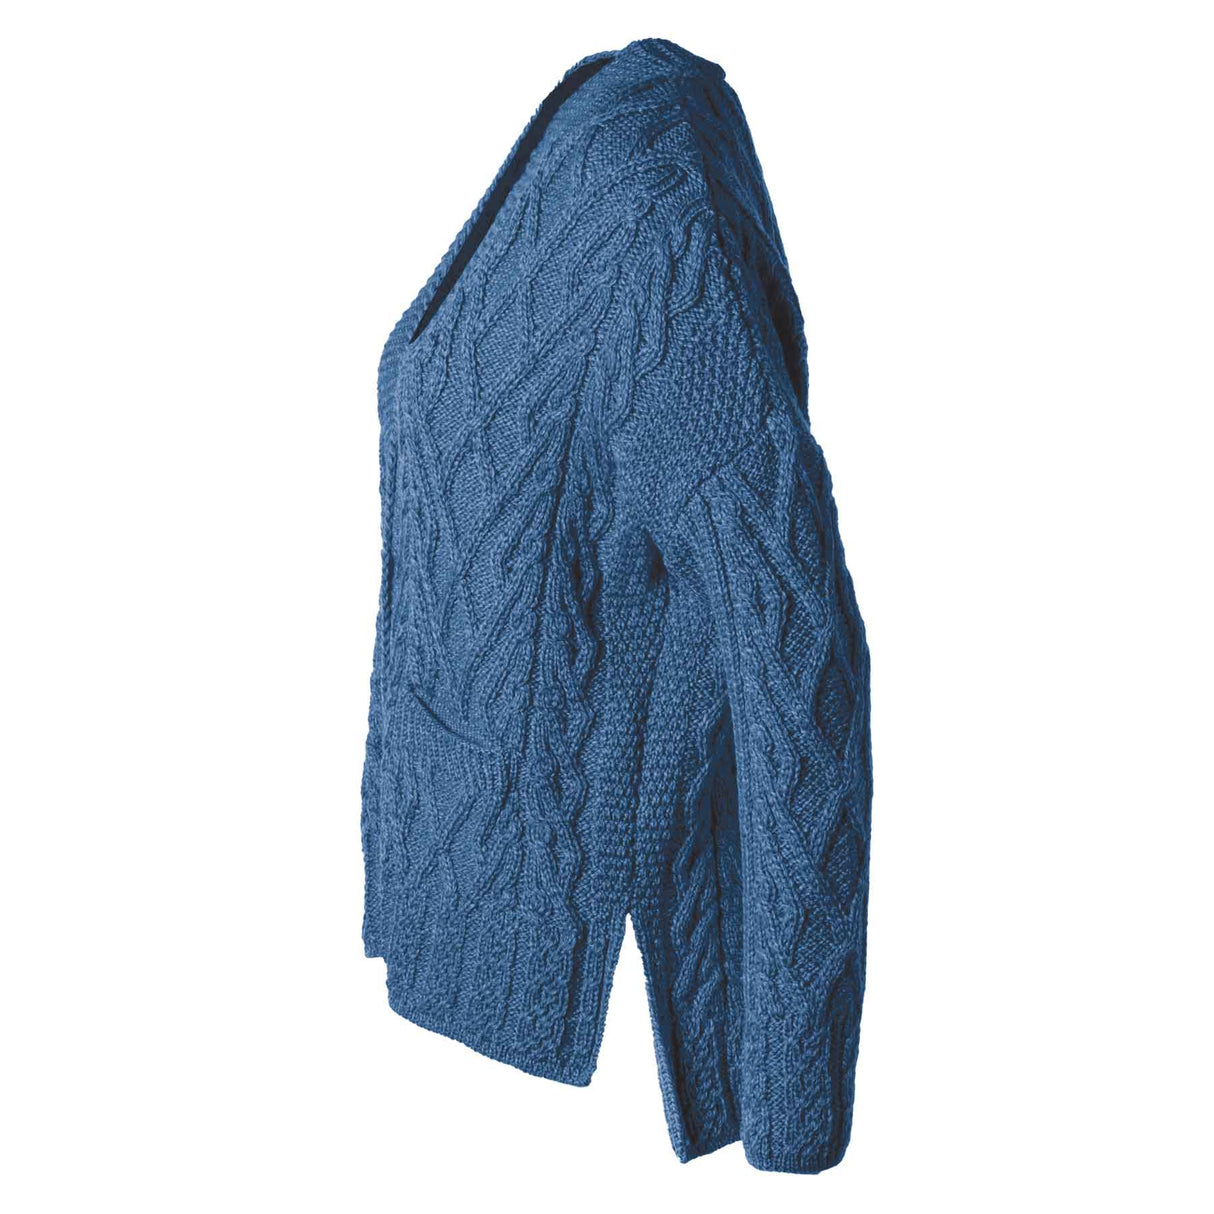 Supersoft Aran Knit Trellis Cardigan, Blue - Creative Irish Gifts